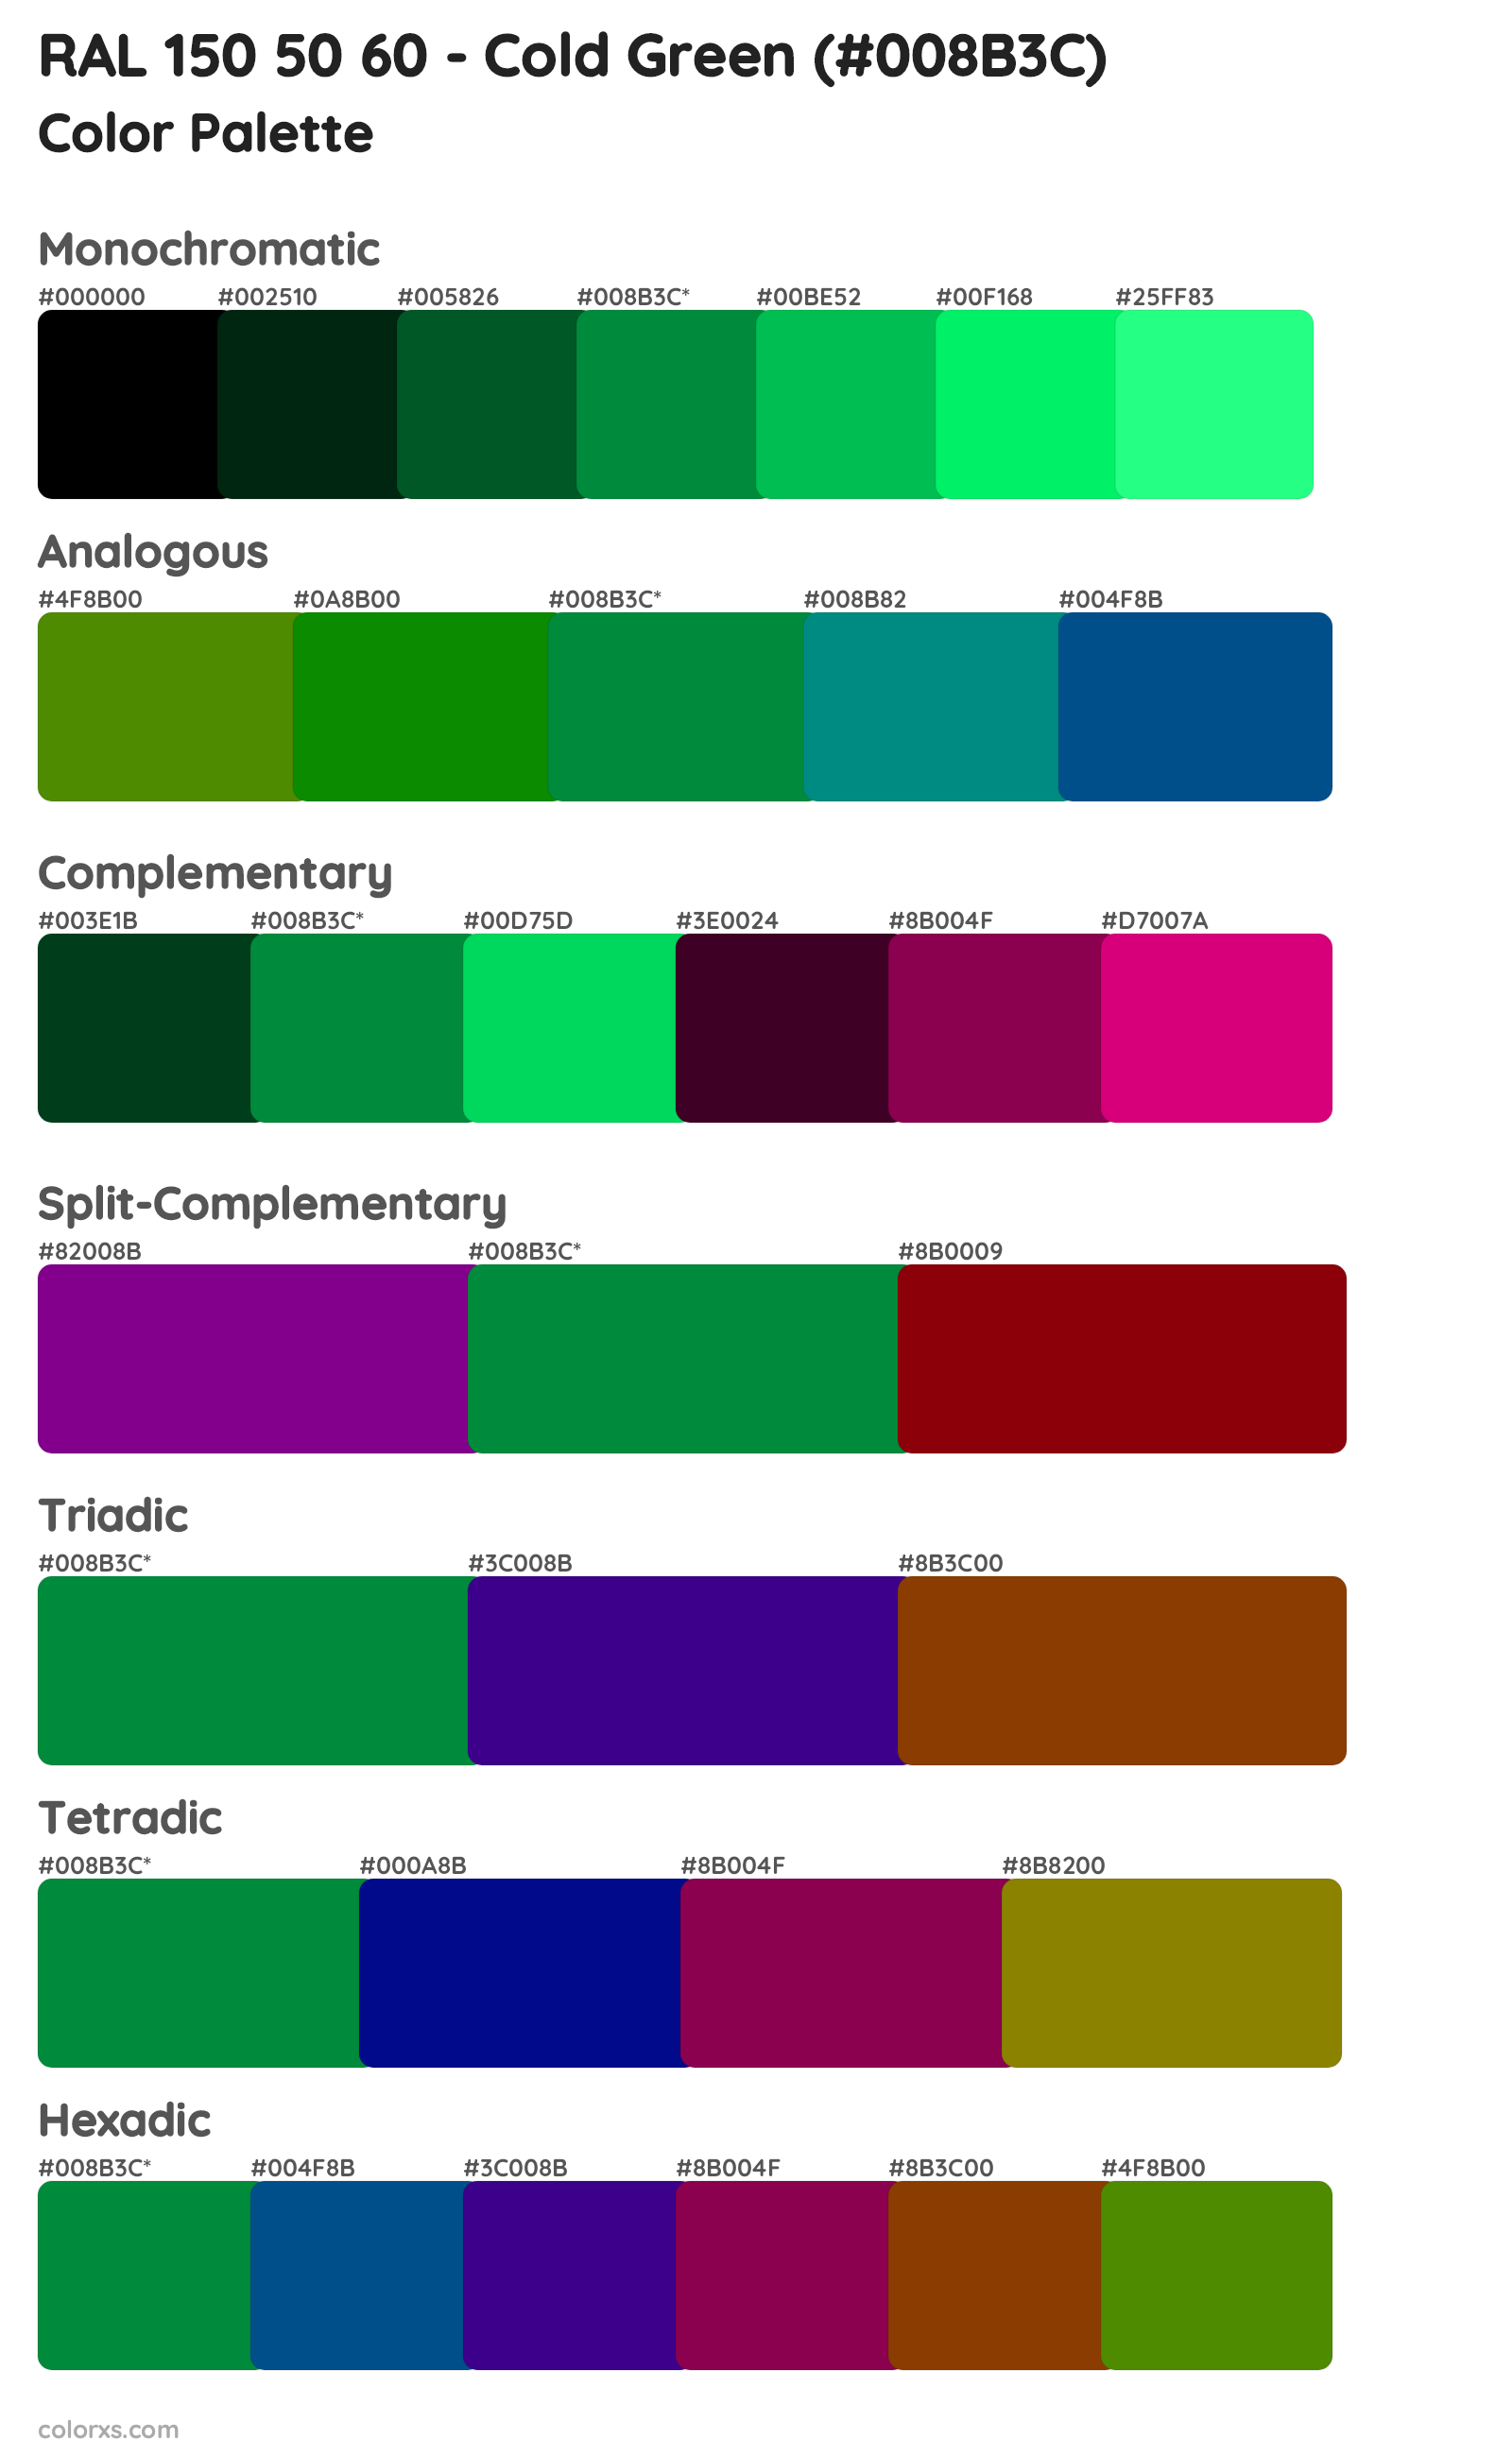 RAL 150 50 60 - Cold Green Color Scheme Palettes